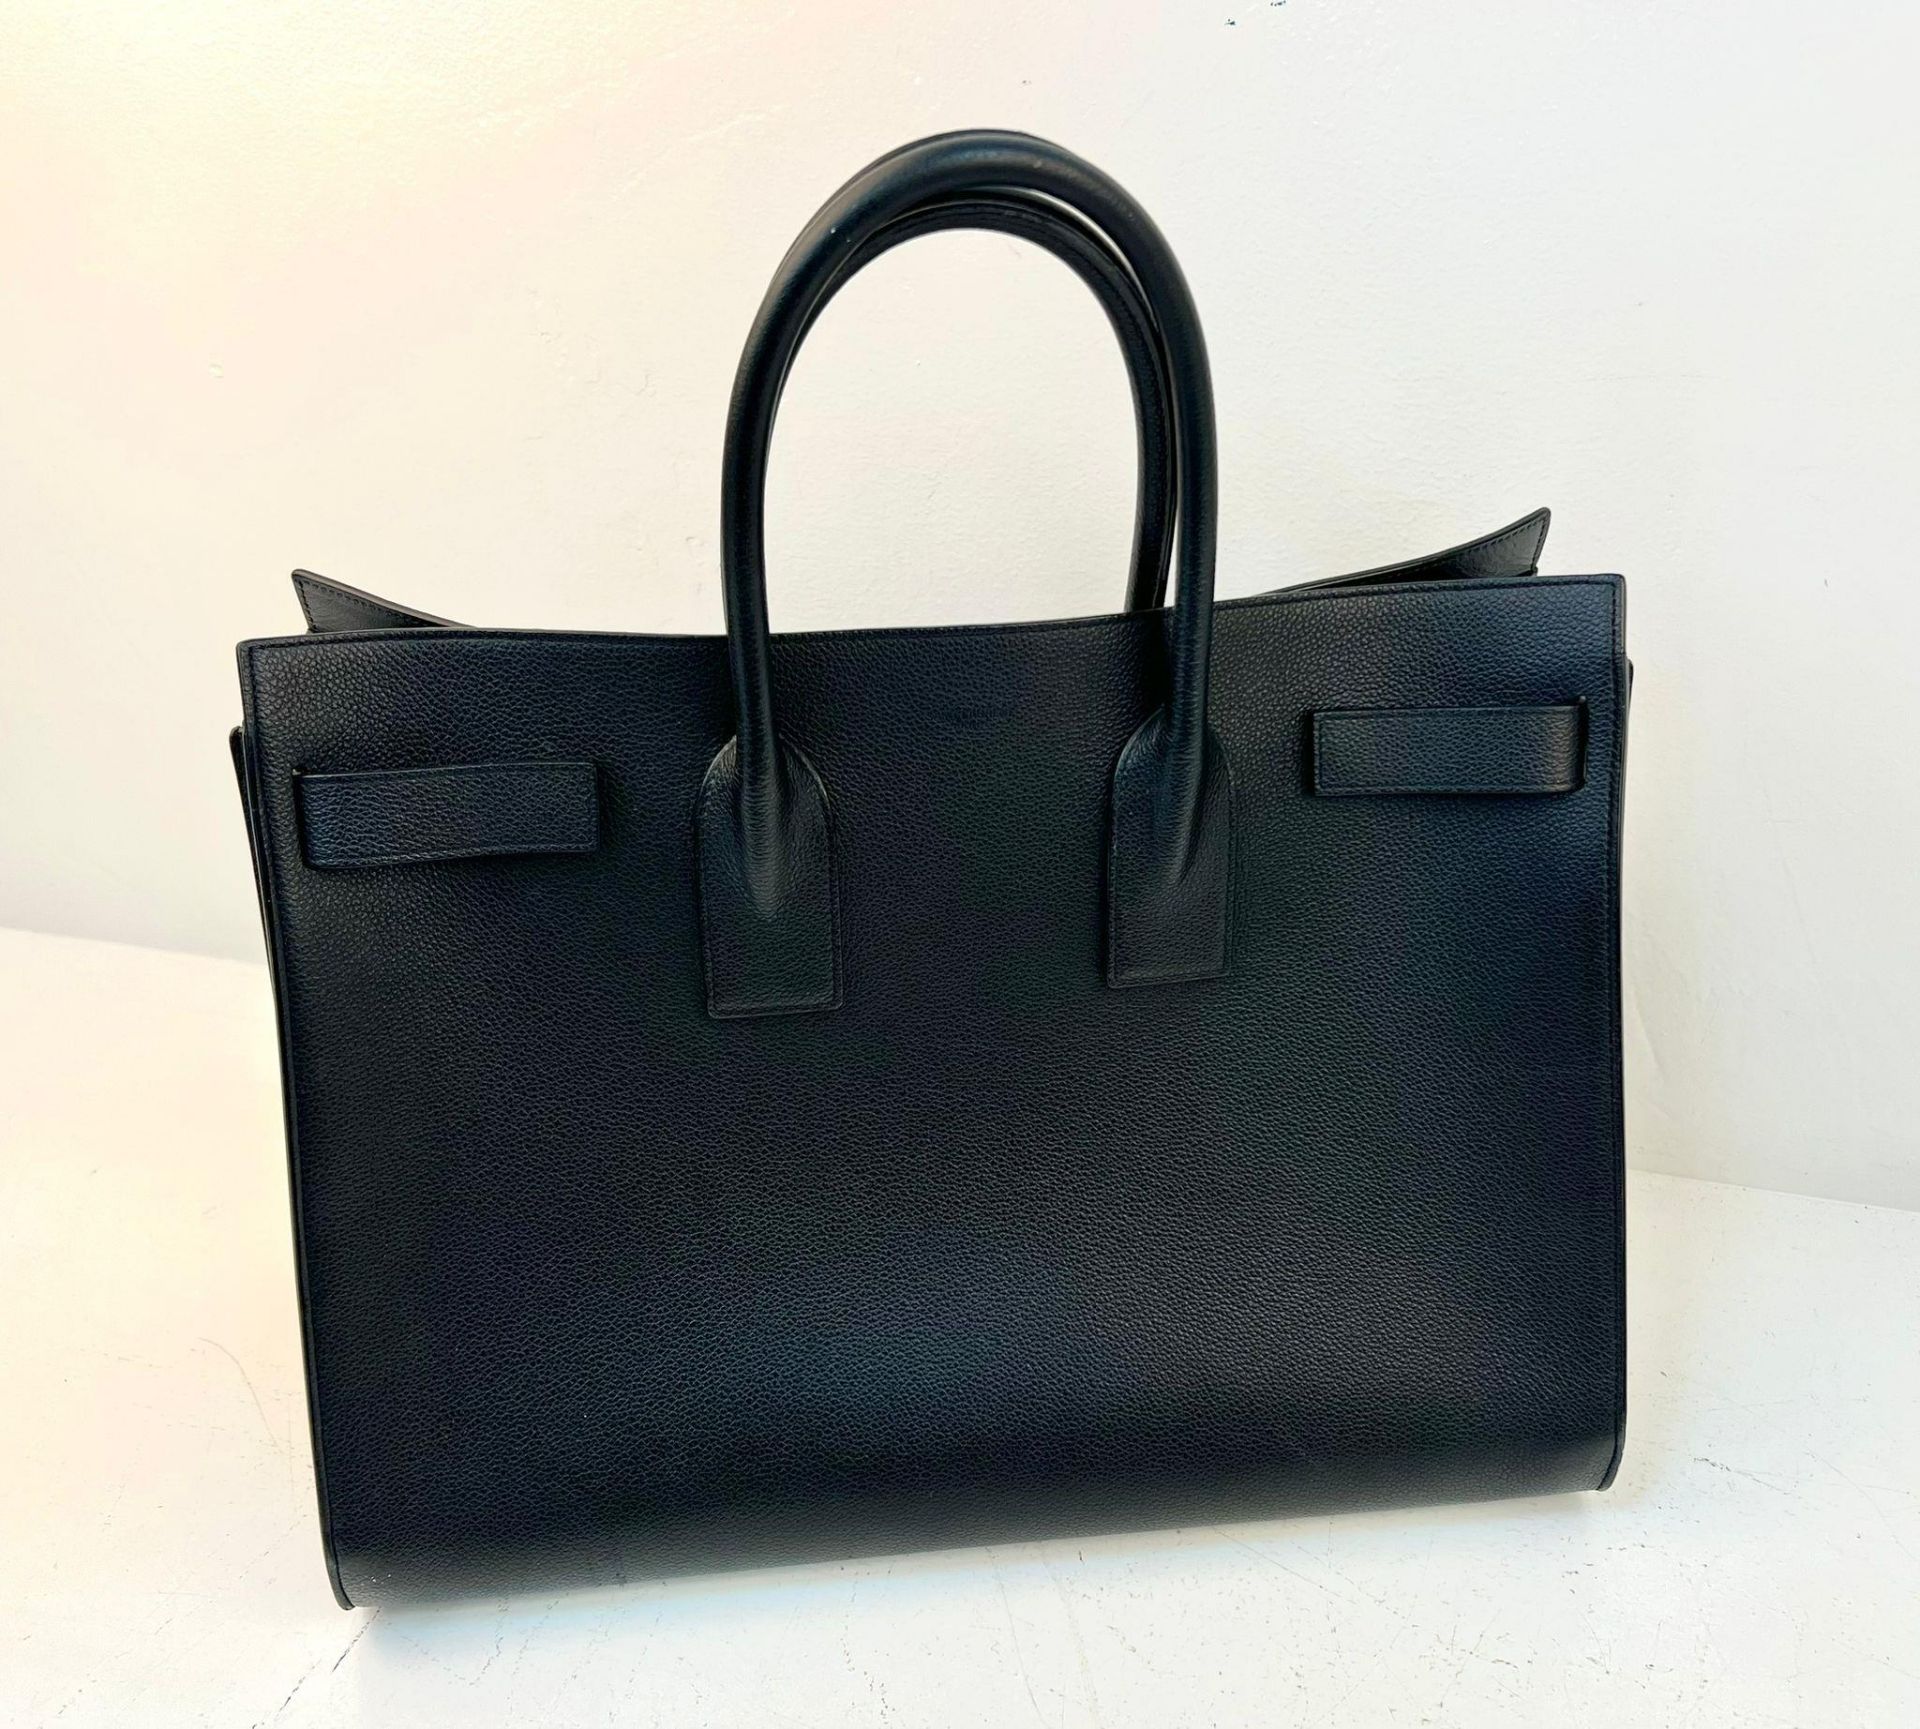 An Yves St Laurent (Saint Laurent) Sac du Jour Black Leather Tote Bag. Luxurious black calfskin